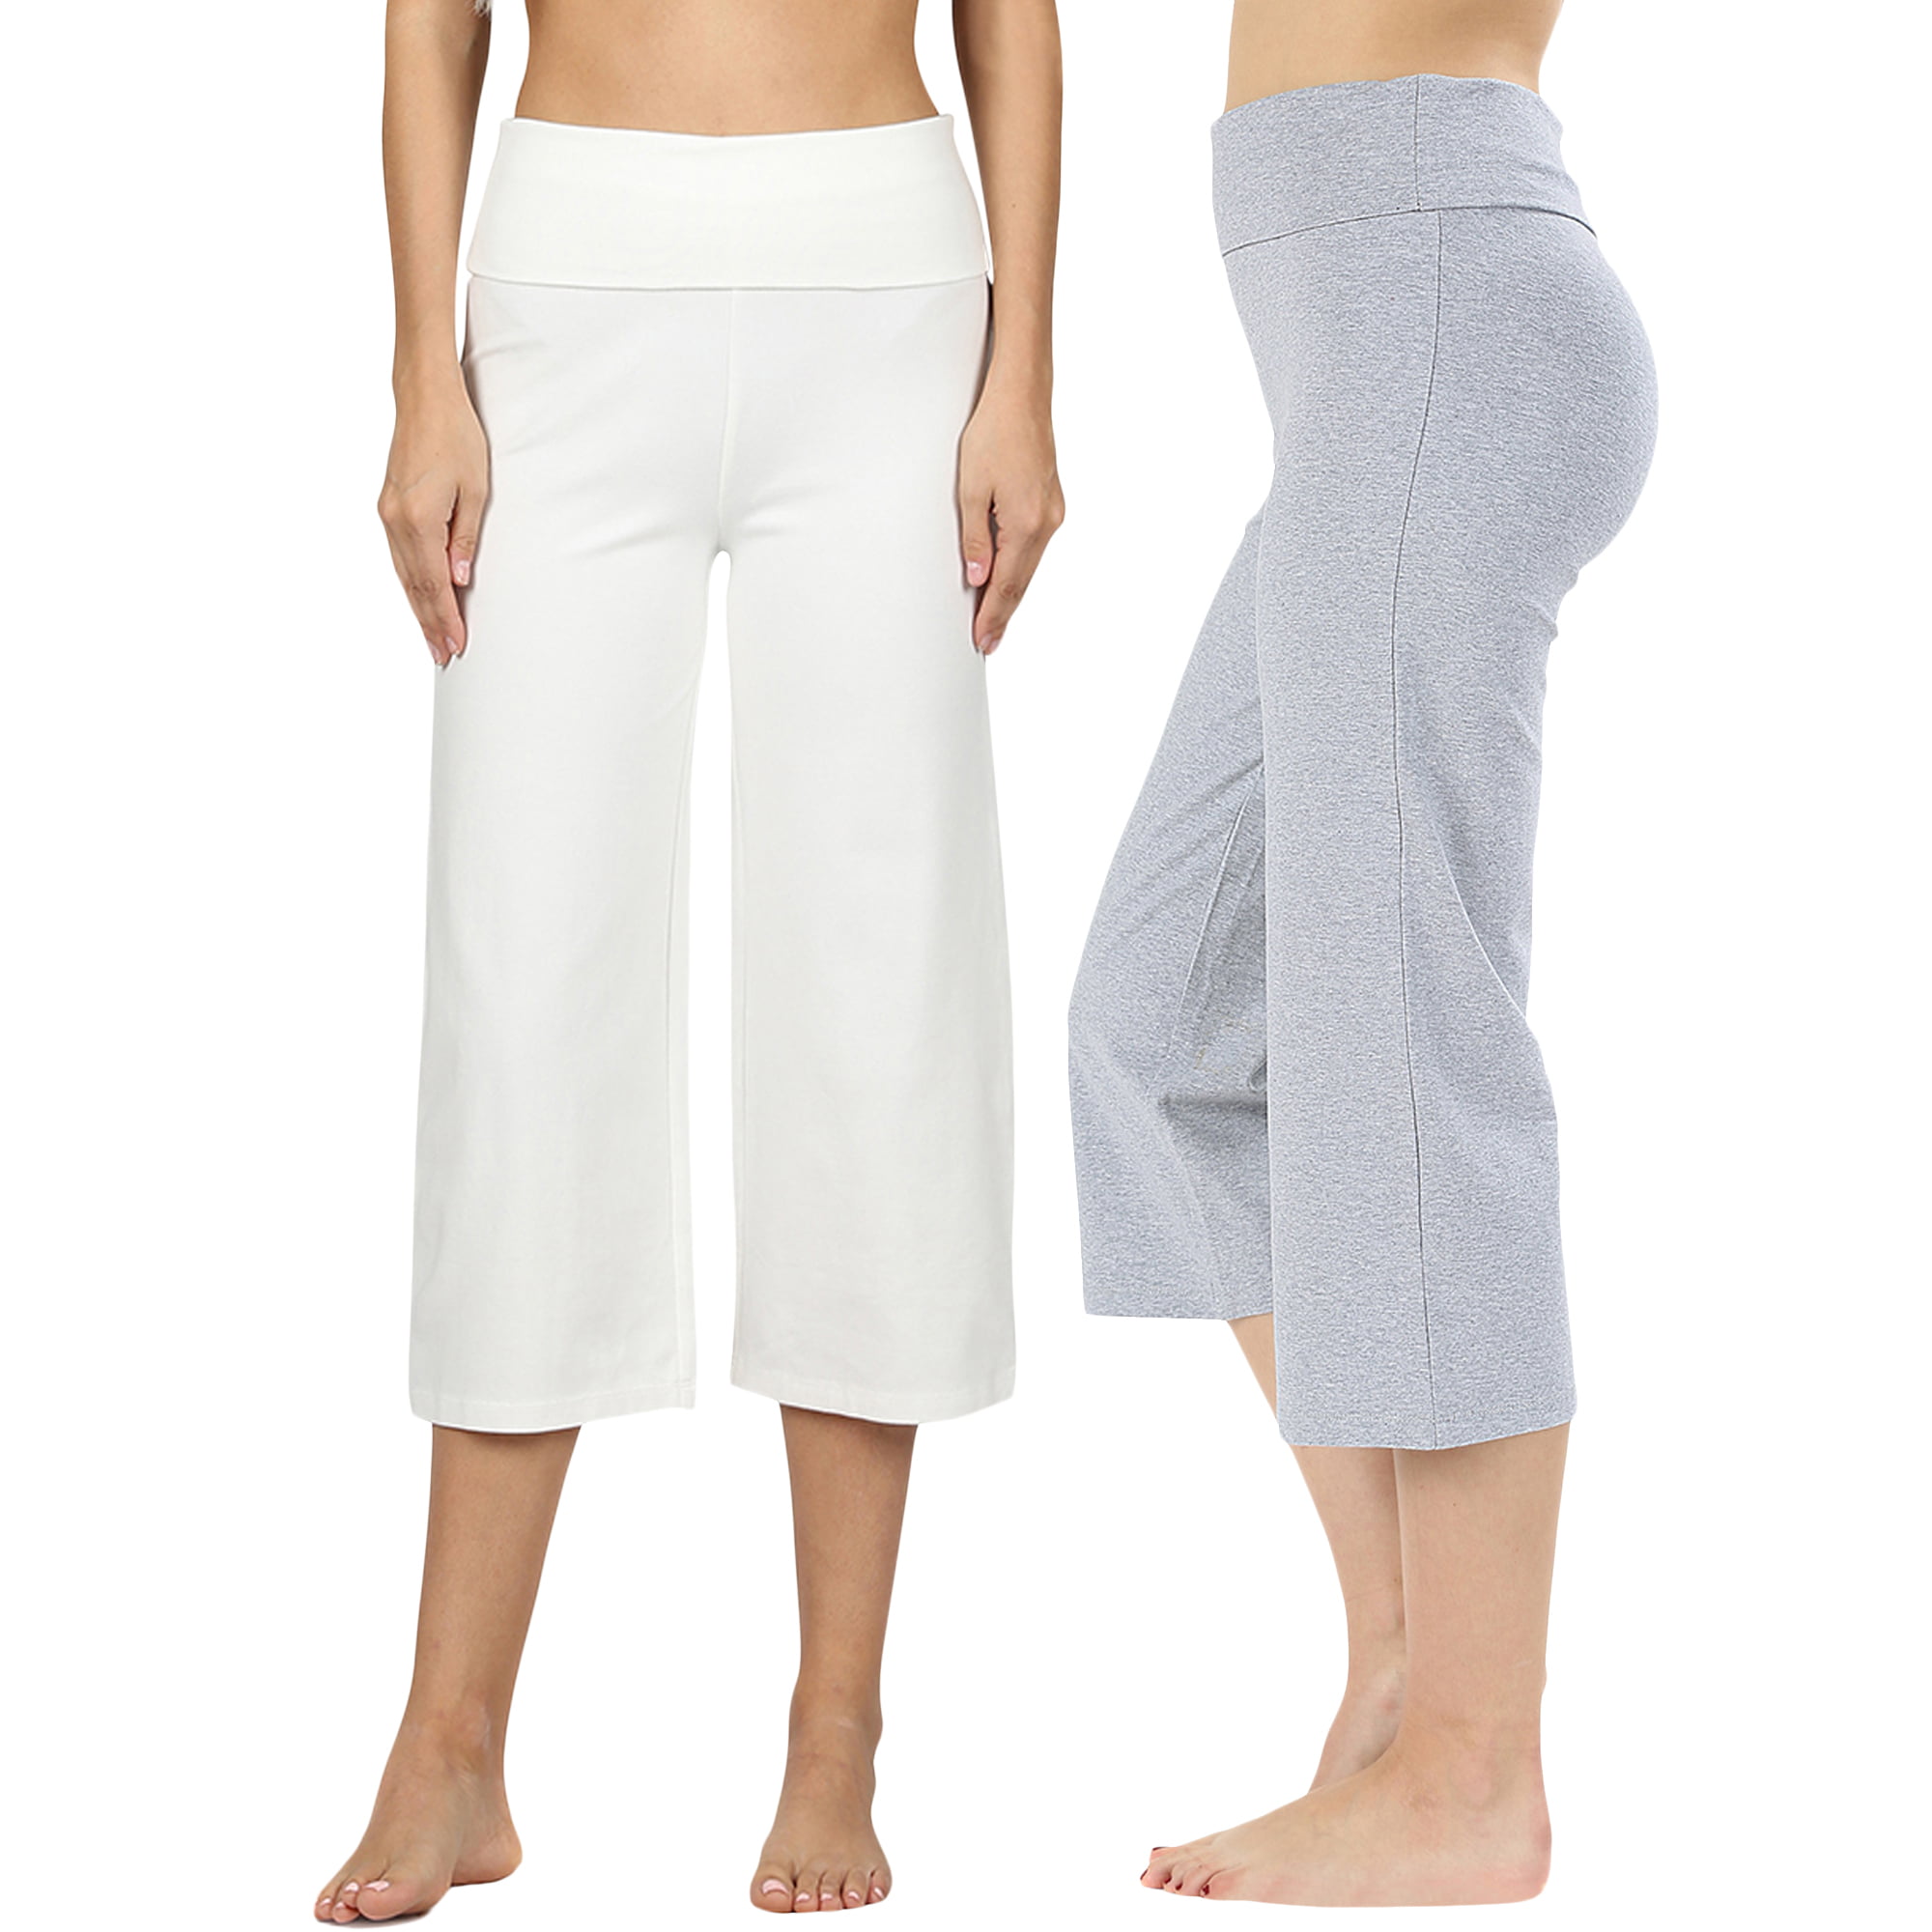 Women's Cotton Fold Over Capri Lounge Yoga Pants (S-3XL) 